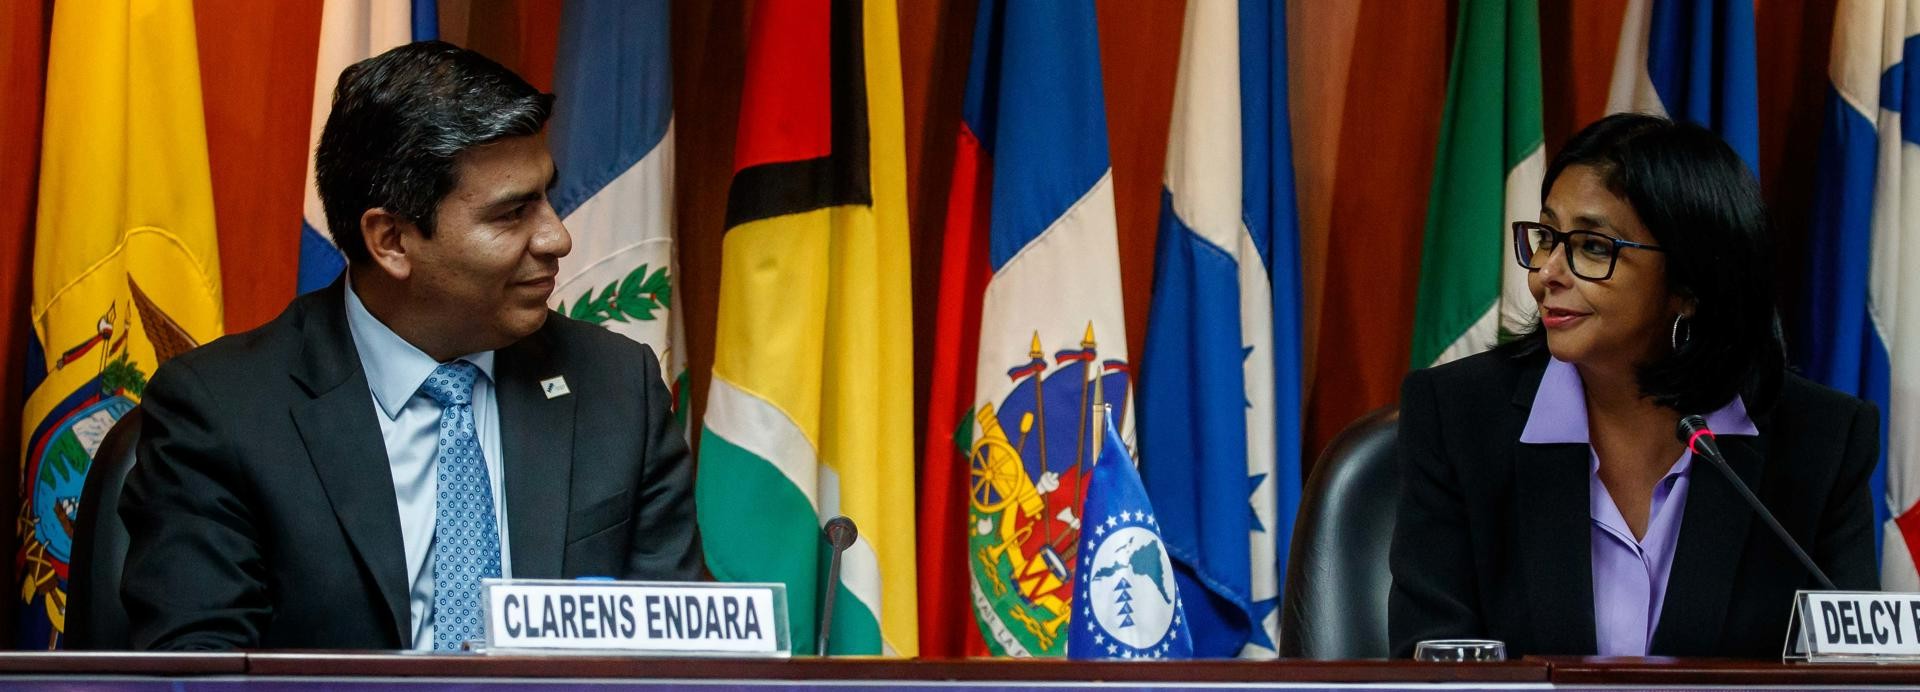 Venezuela supports SELA's work in pursuit of regional integration